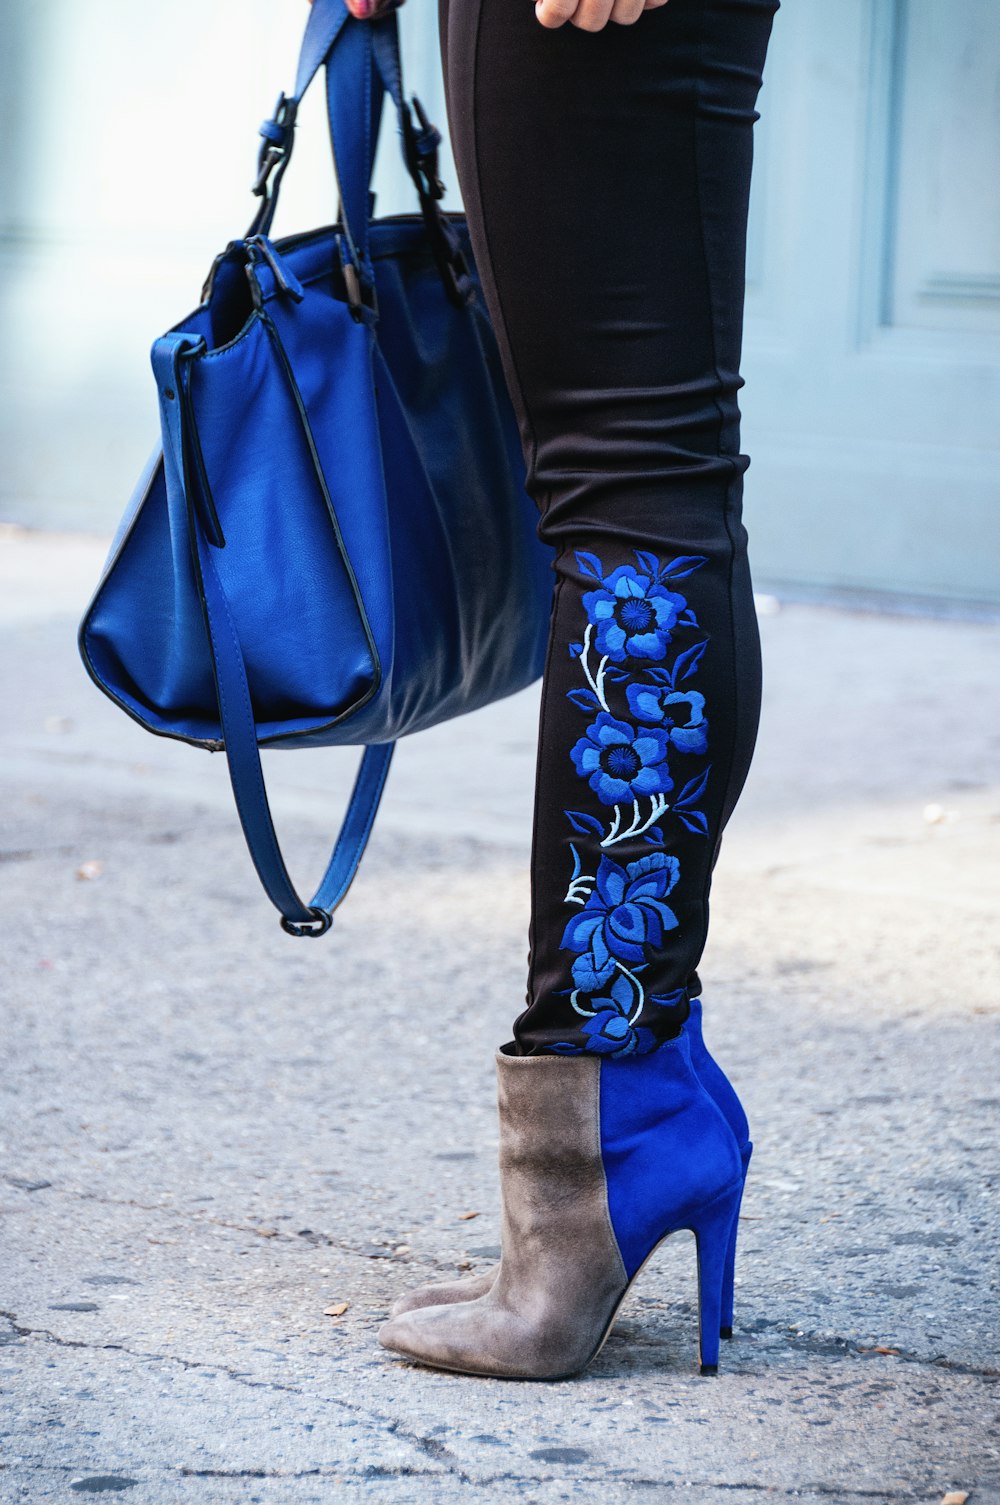 persona con polainas negras, botines y bolso azul